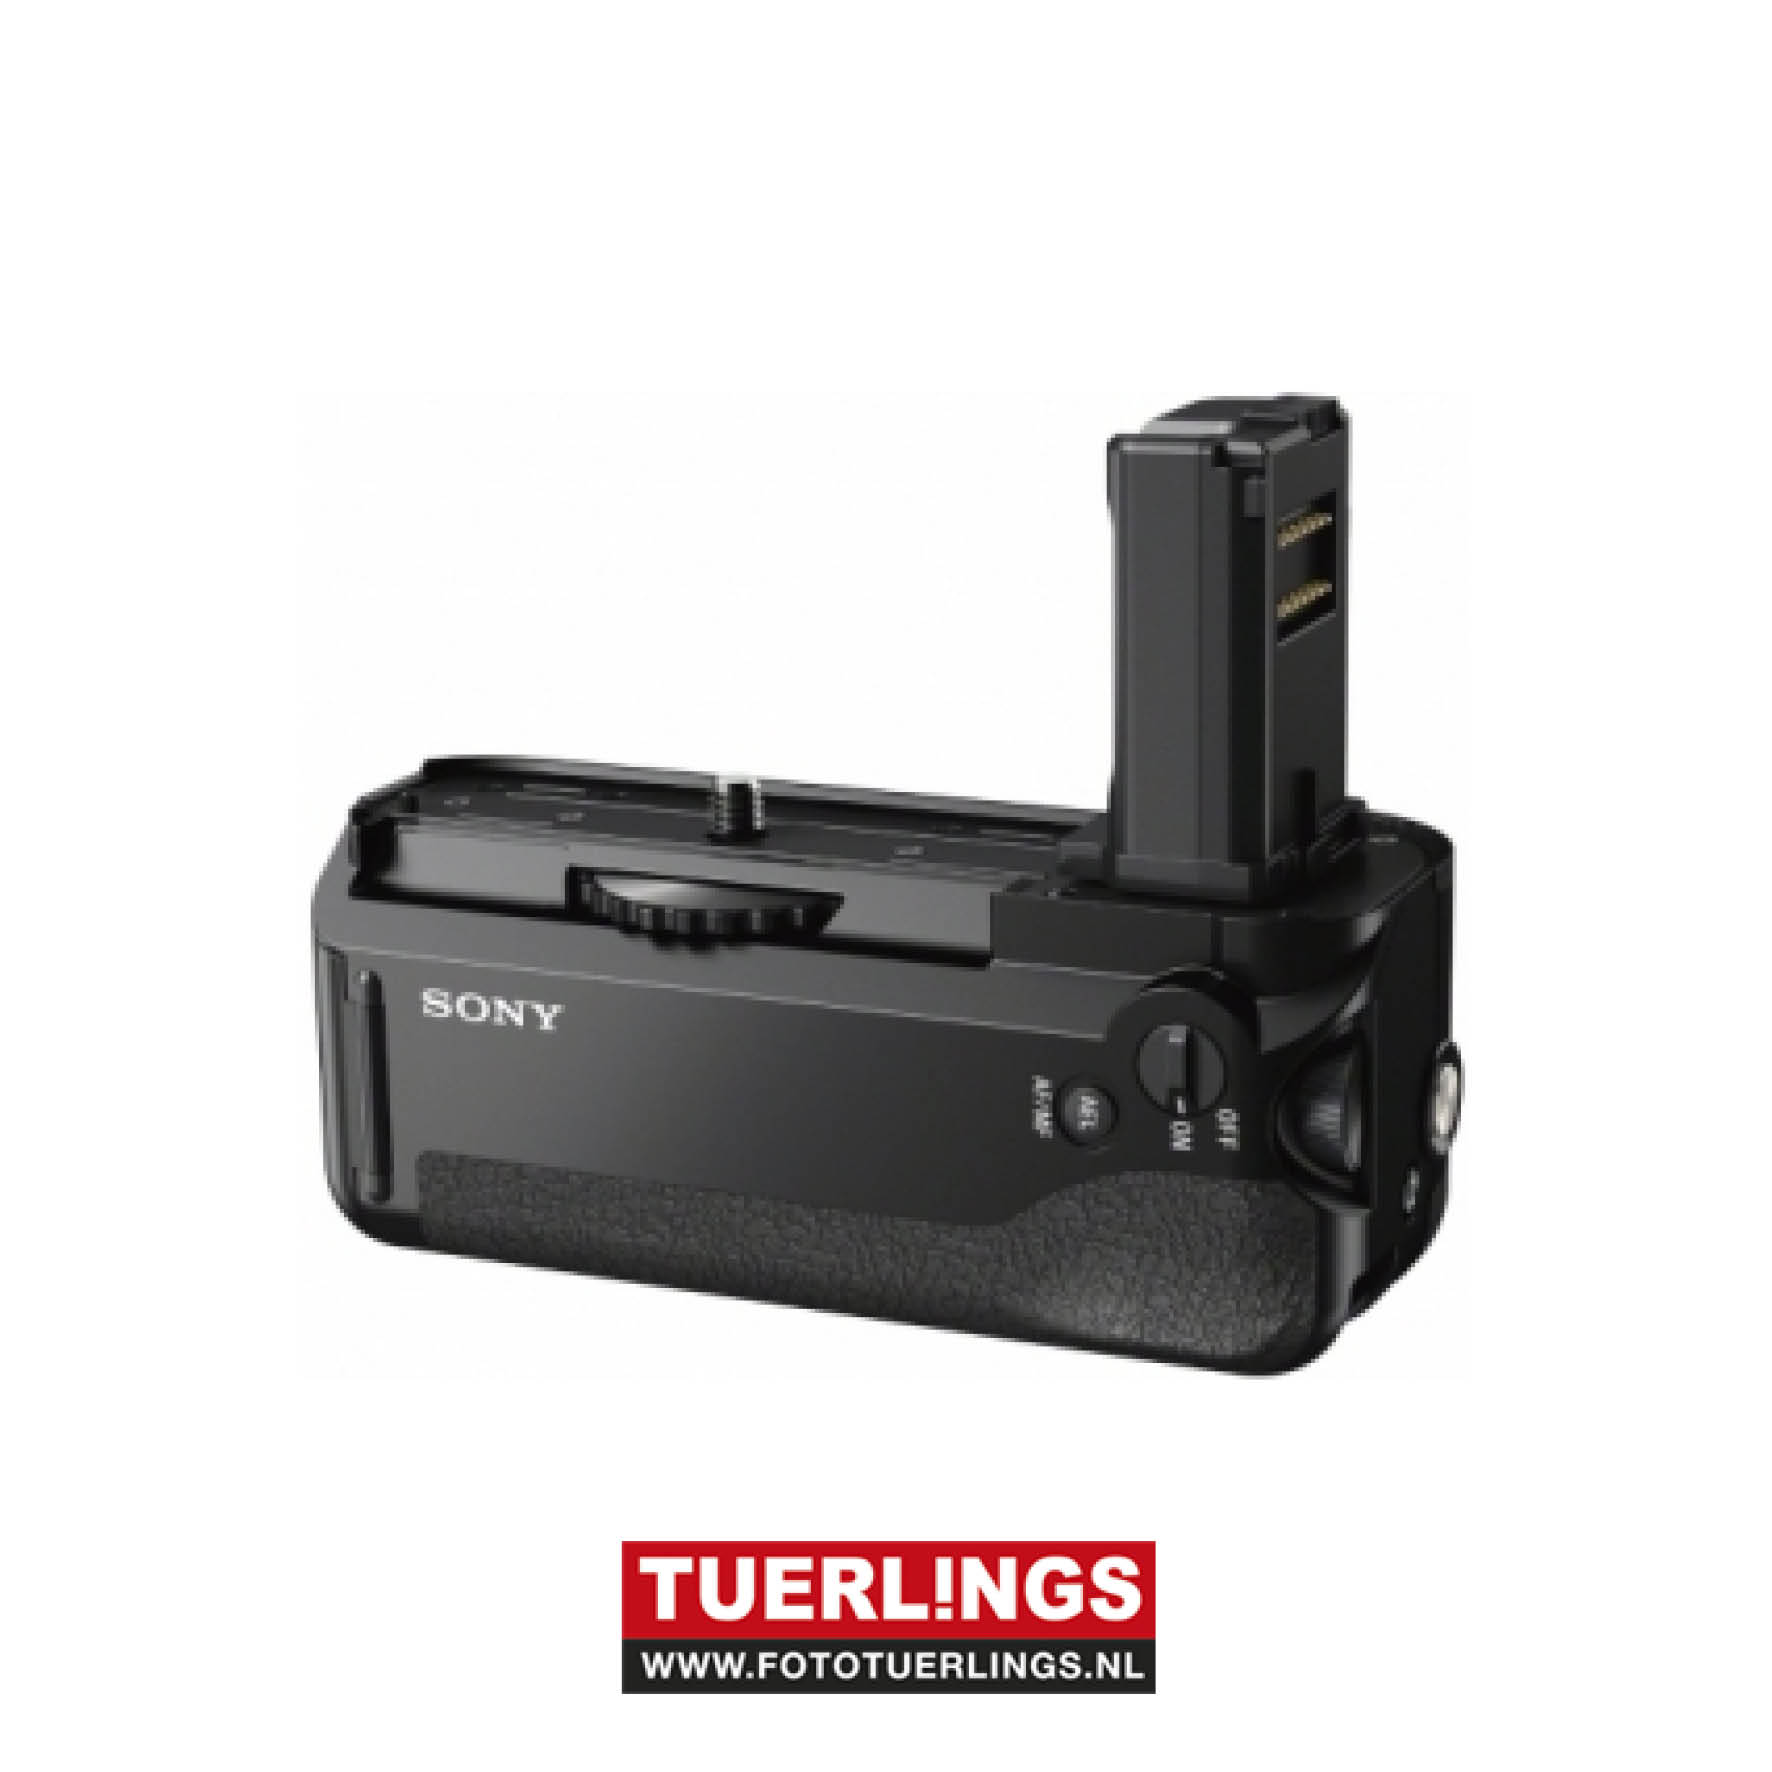 voorzien Wat toediening Sony VGC1EM / VG-C1EM A7/A7R/A7S Batterij Grip - Foto Tuerlings